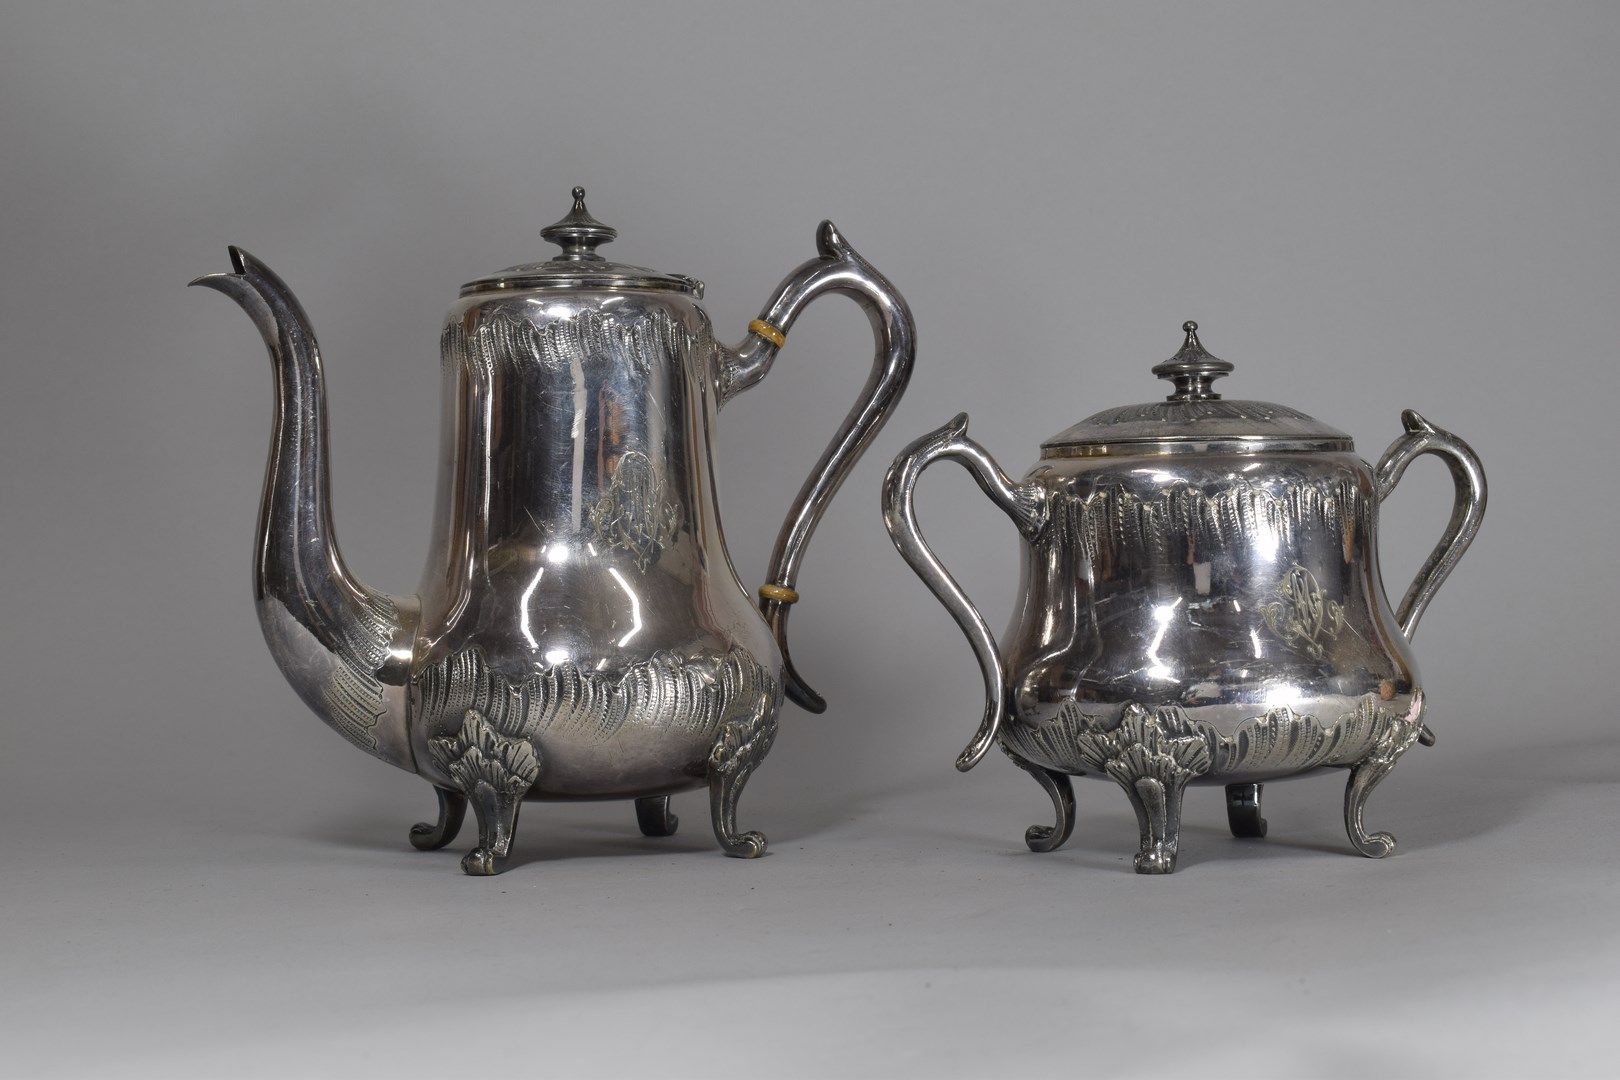 Null 镀银茶壶和糖碗，印有MORLOT字样

- 糖碗 高：16厘米

- 茶壶高度：21厘米